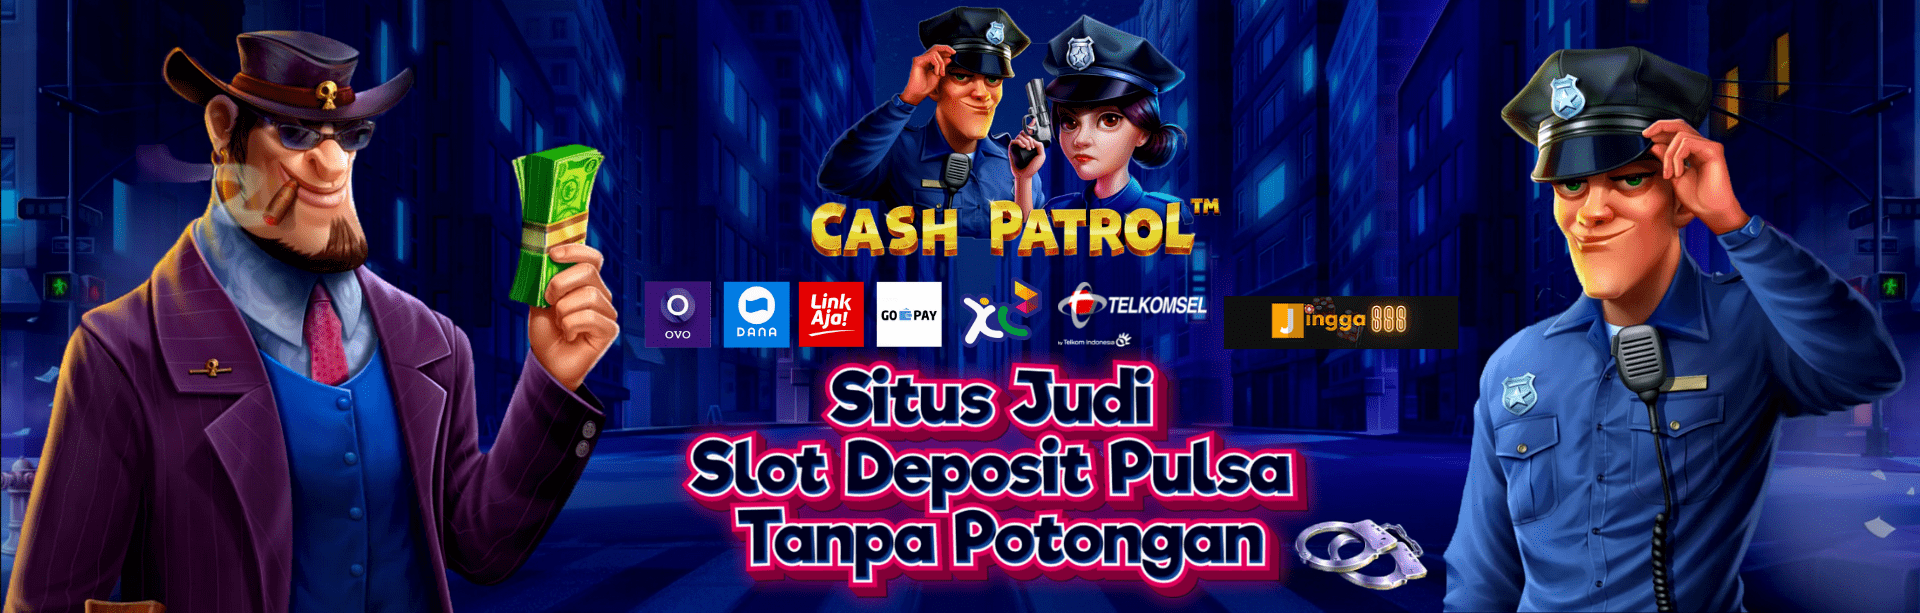 Situs Judi Slot Deposit Pulsa Tanpa Potongan